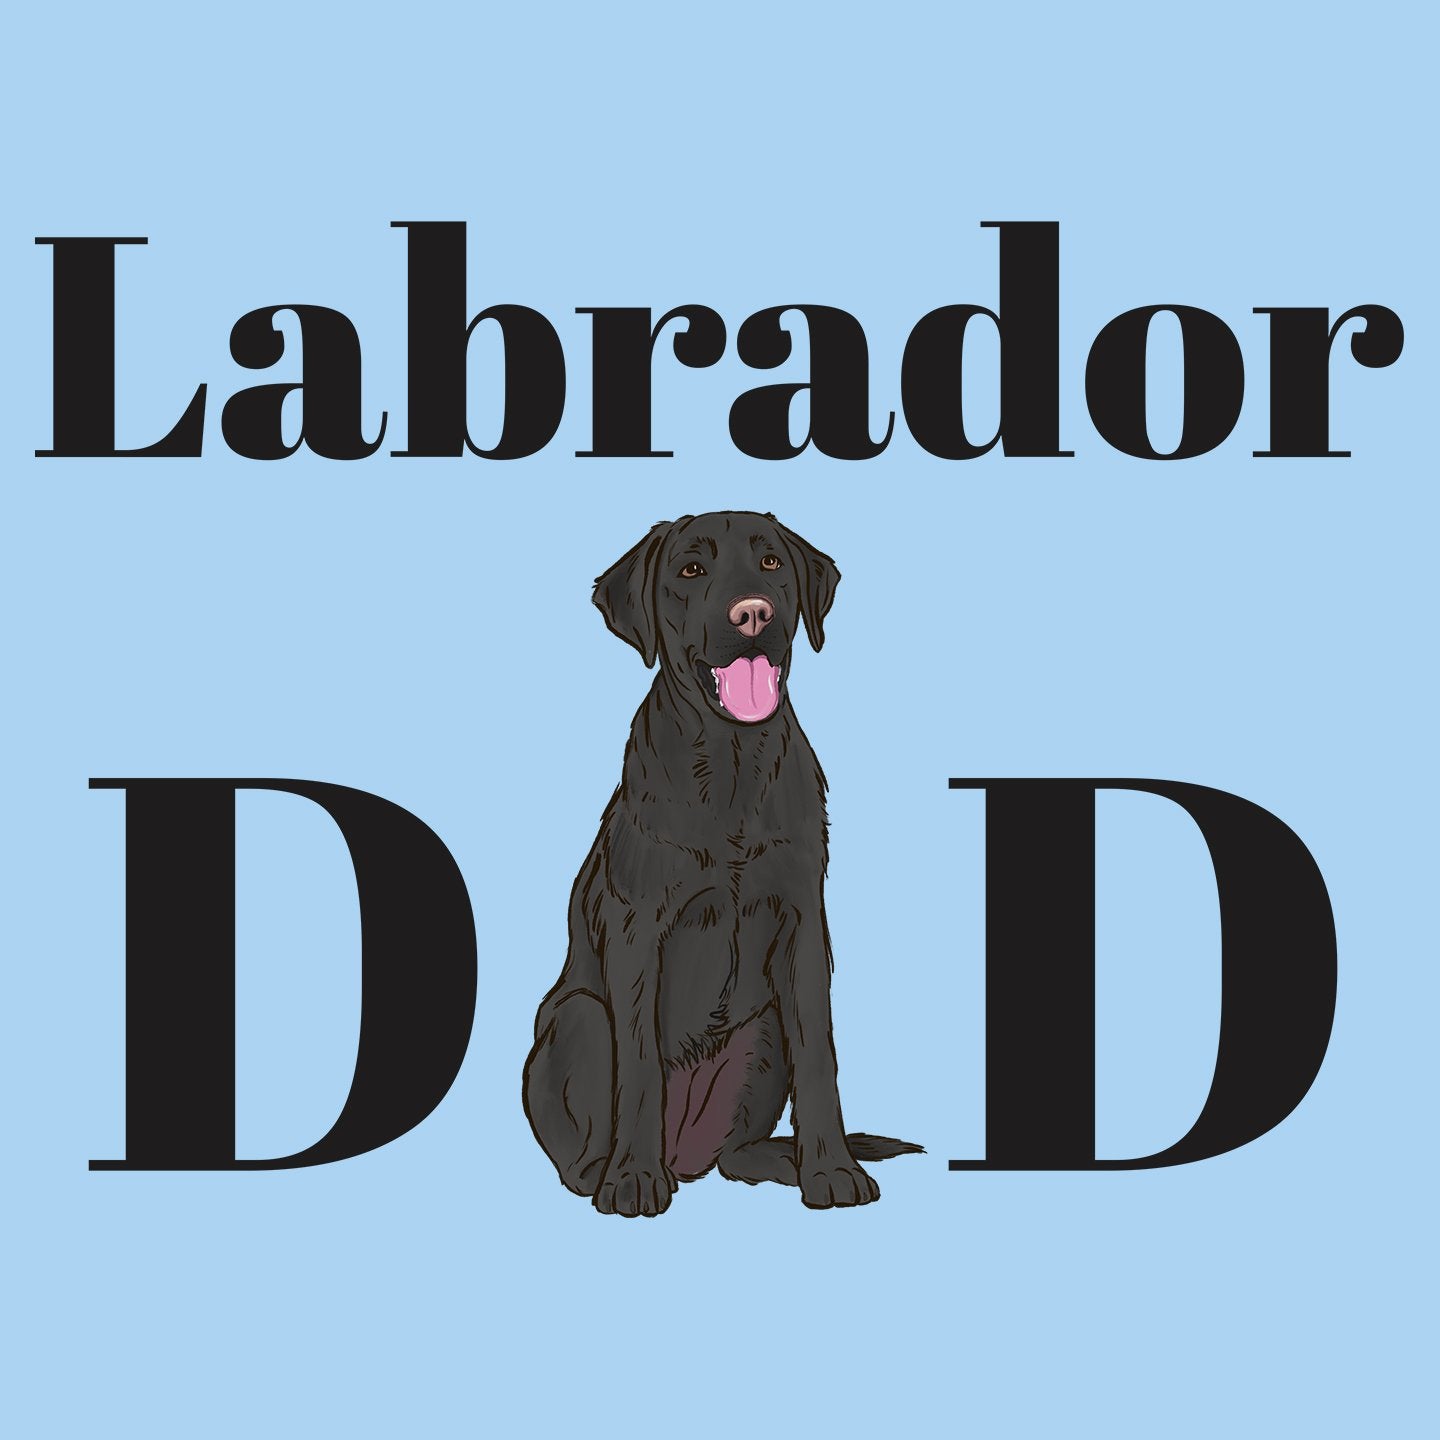 Black Labrador Dad Illustration - Adult Unisex T-Shirt